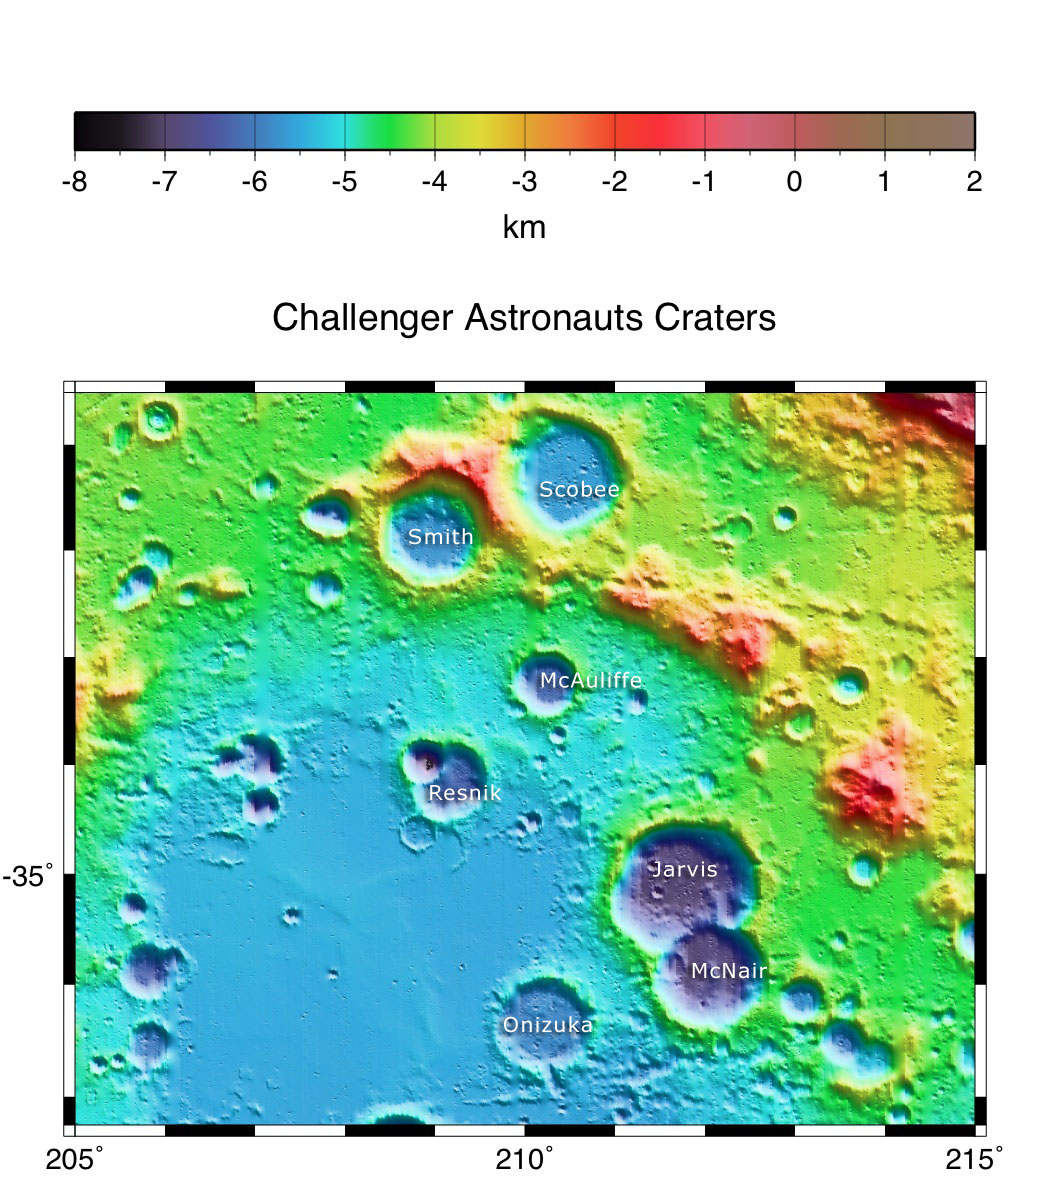 Challenger Astronauts Craters